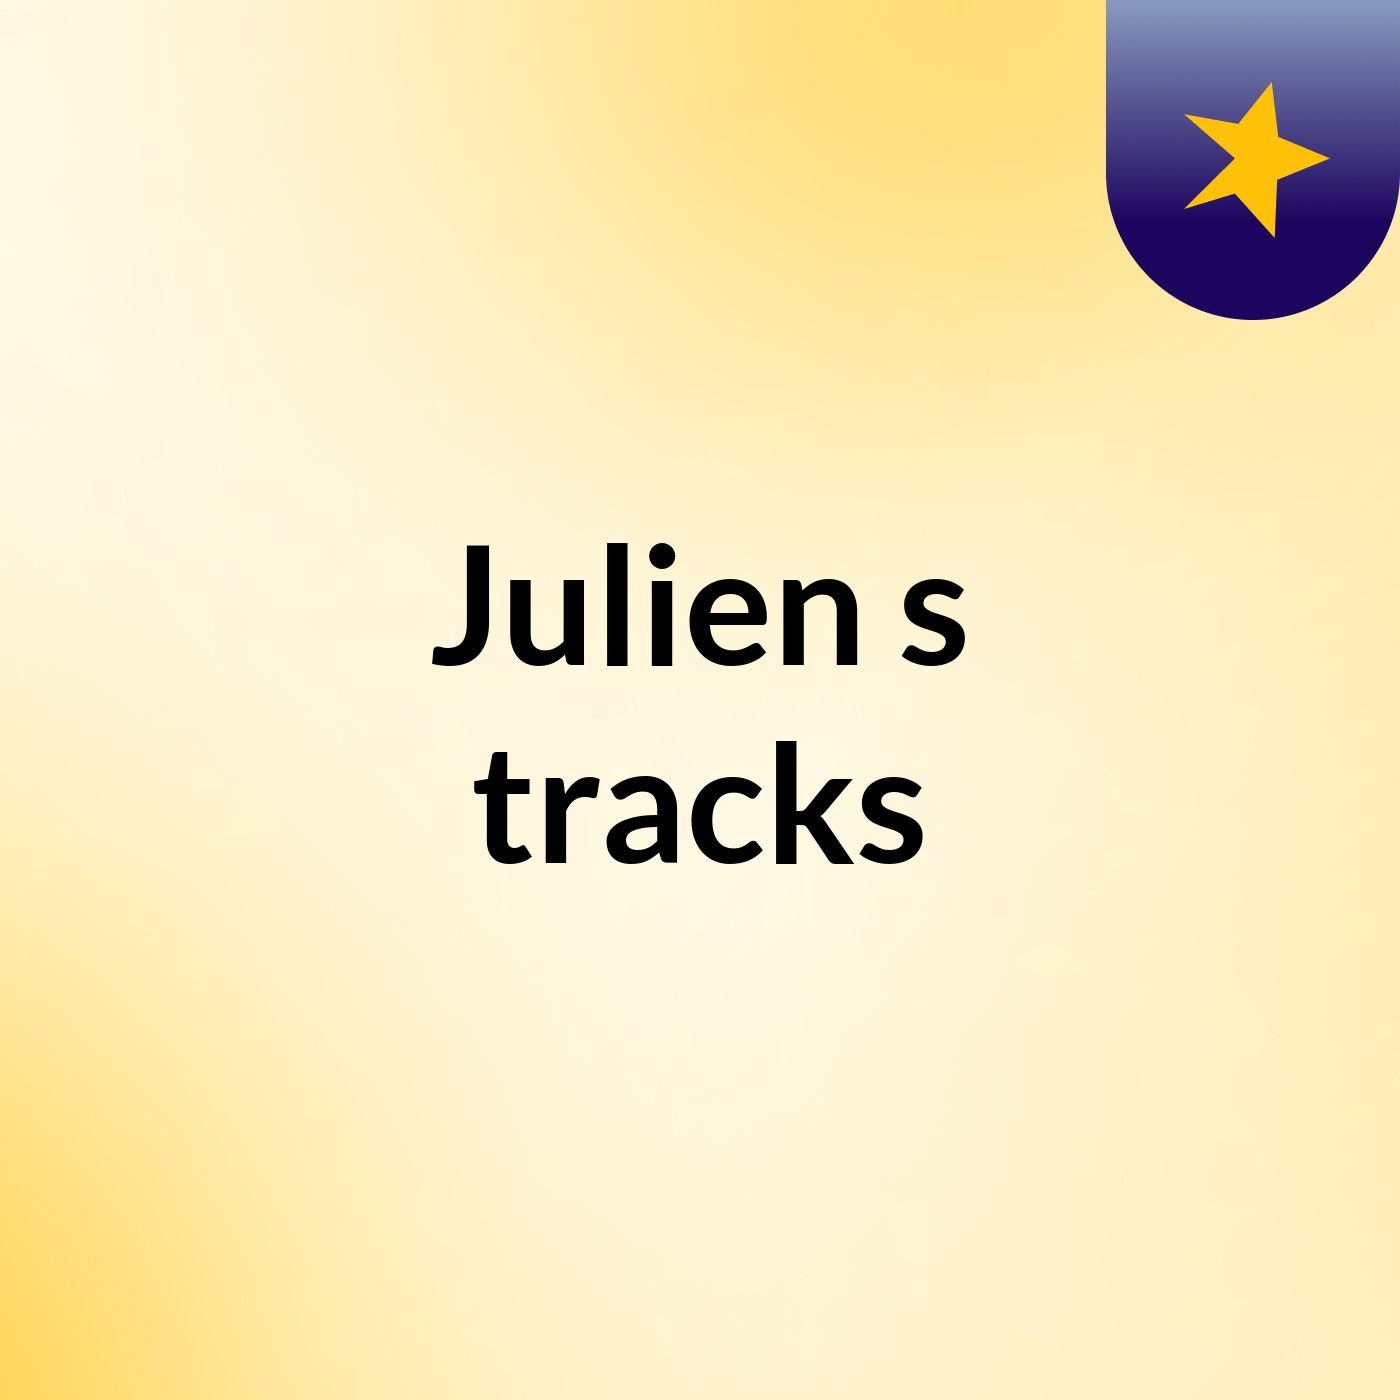 Julien's tracks